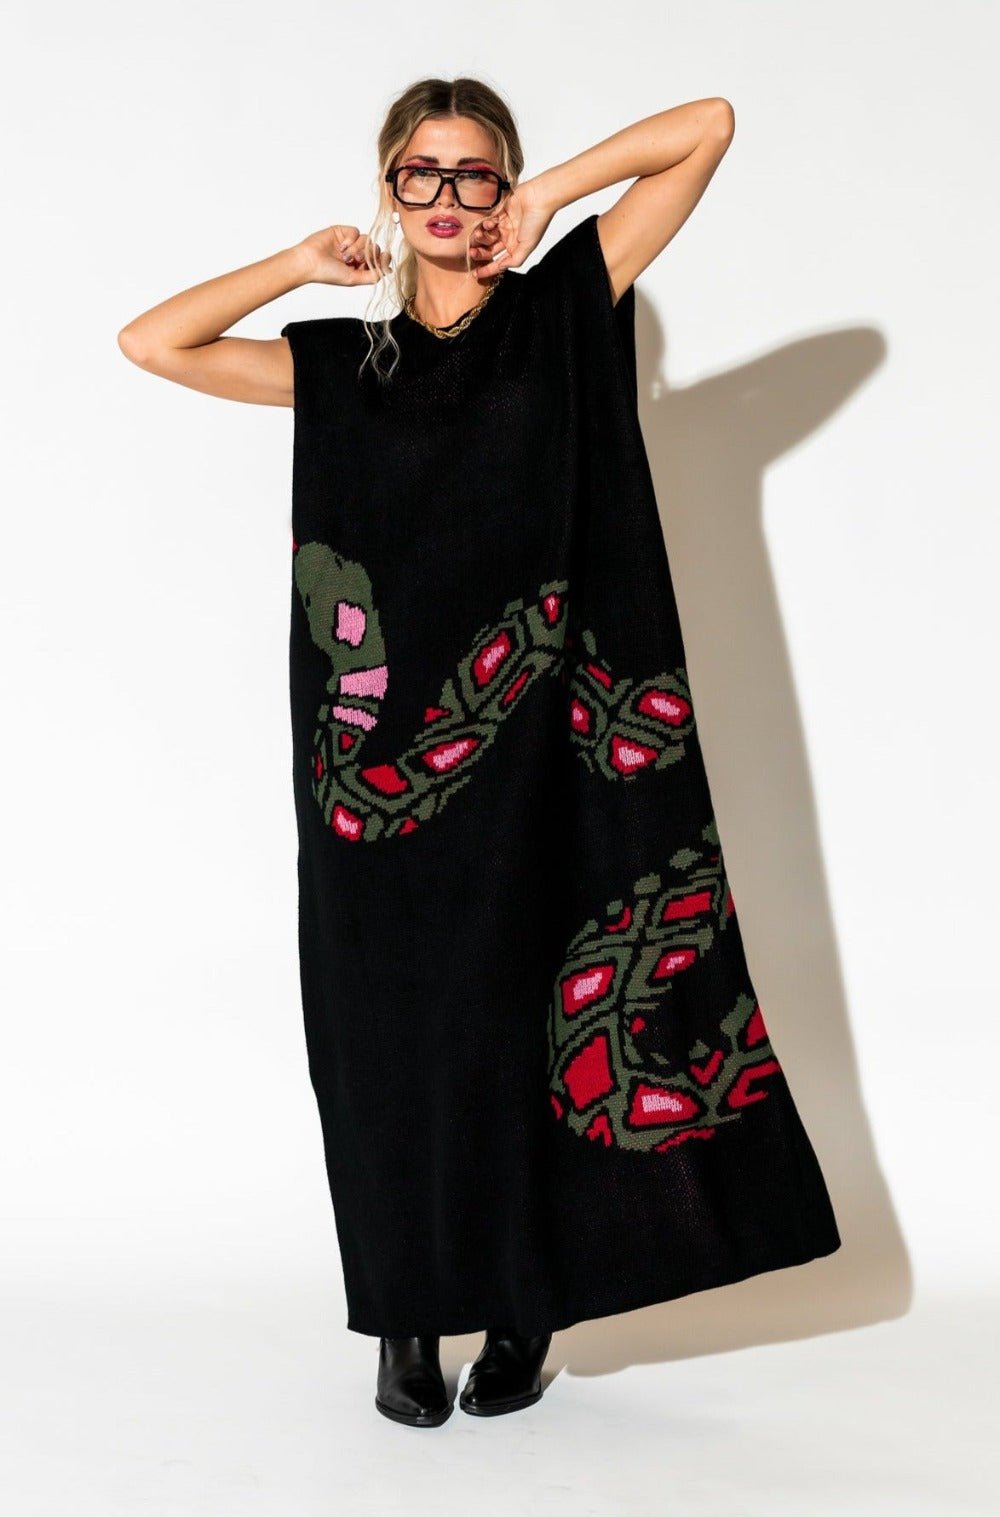 LALA ORIGINAL: Big – Reputation Oversized Dress Lala in Snake Maxi Knit in Dressed